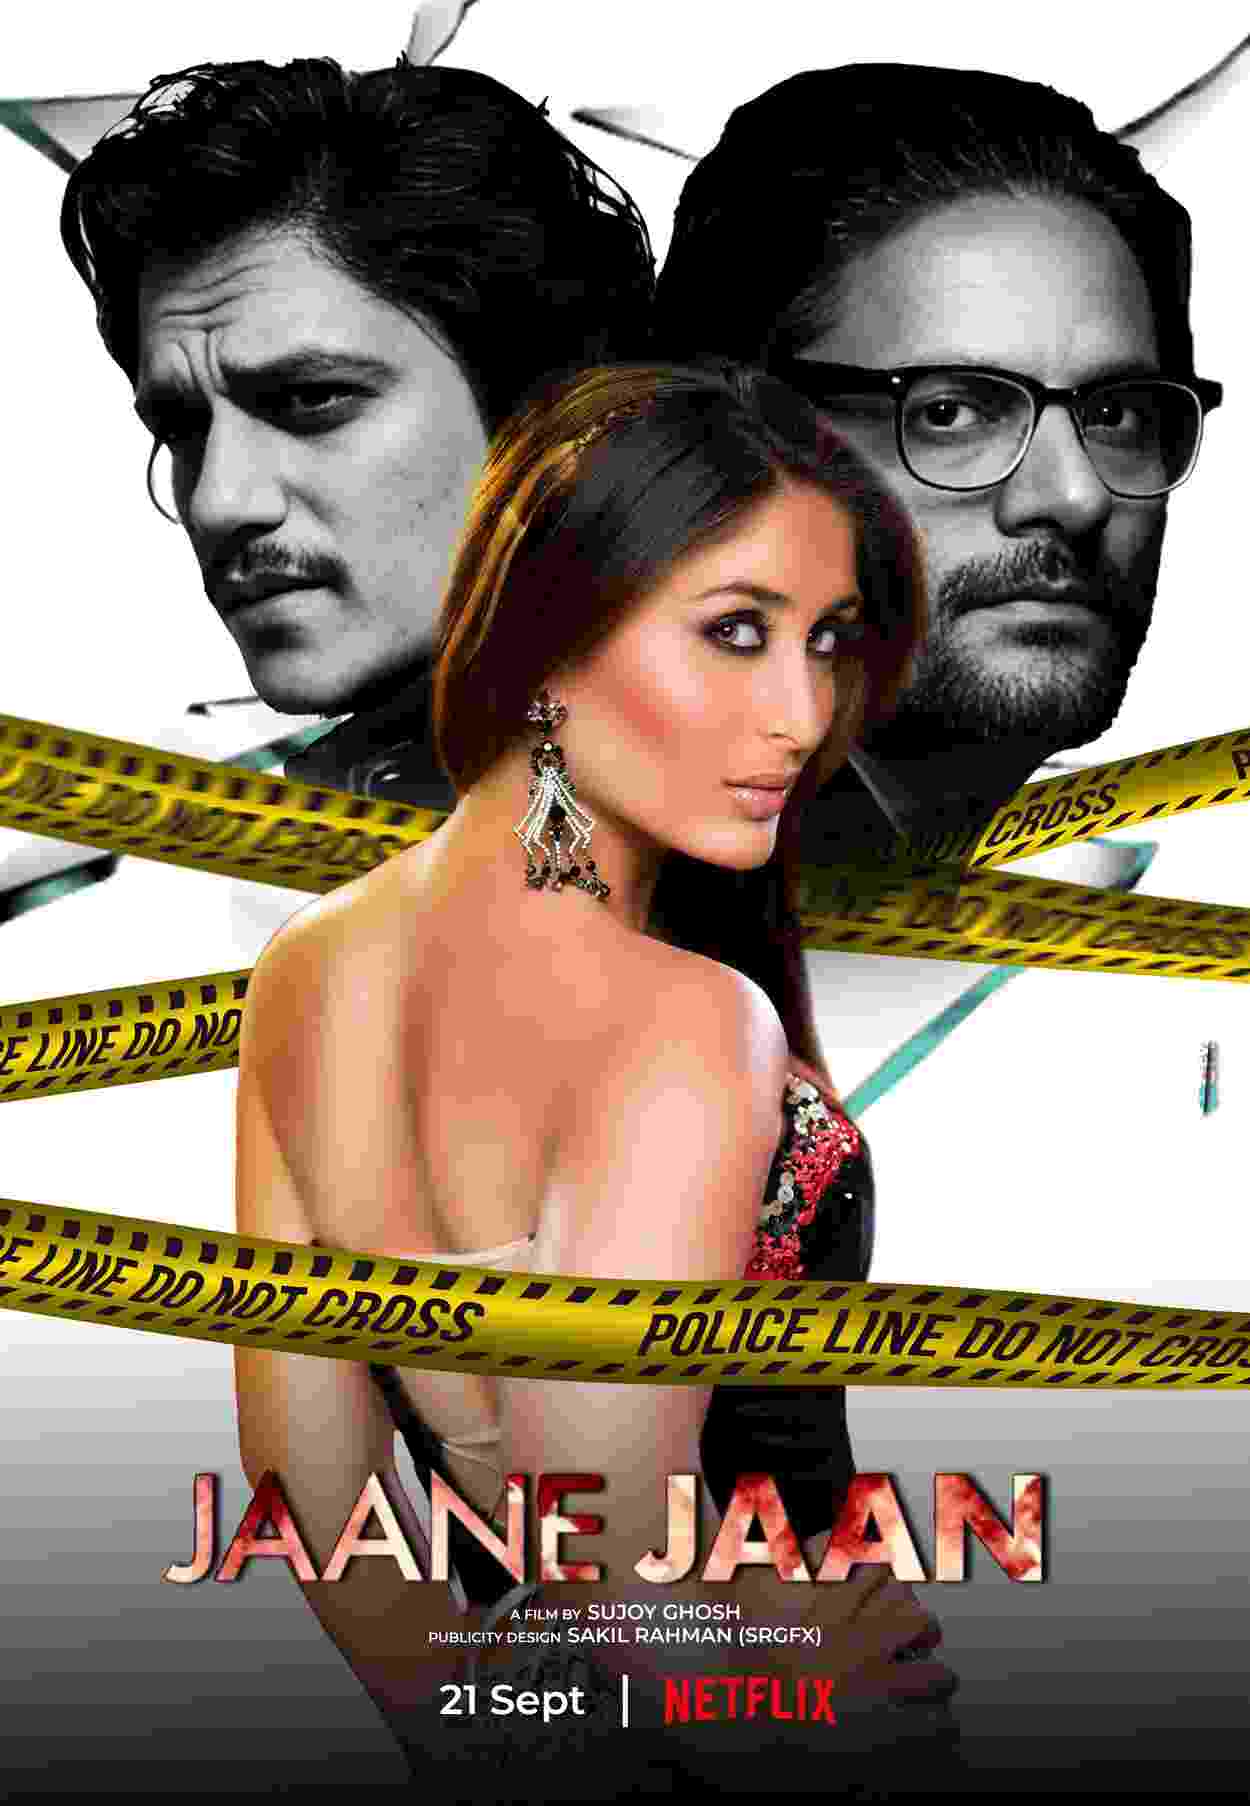 Jaane Jaan Review (Netflix) – Bollymoviereviewz